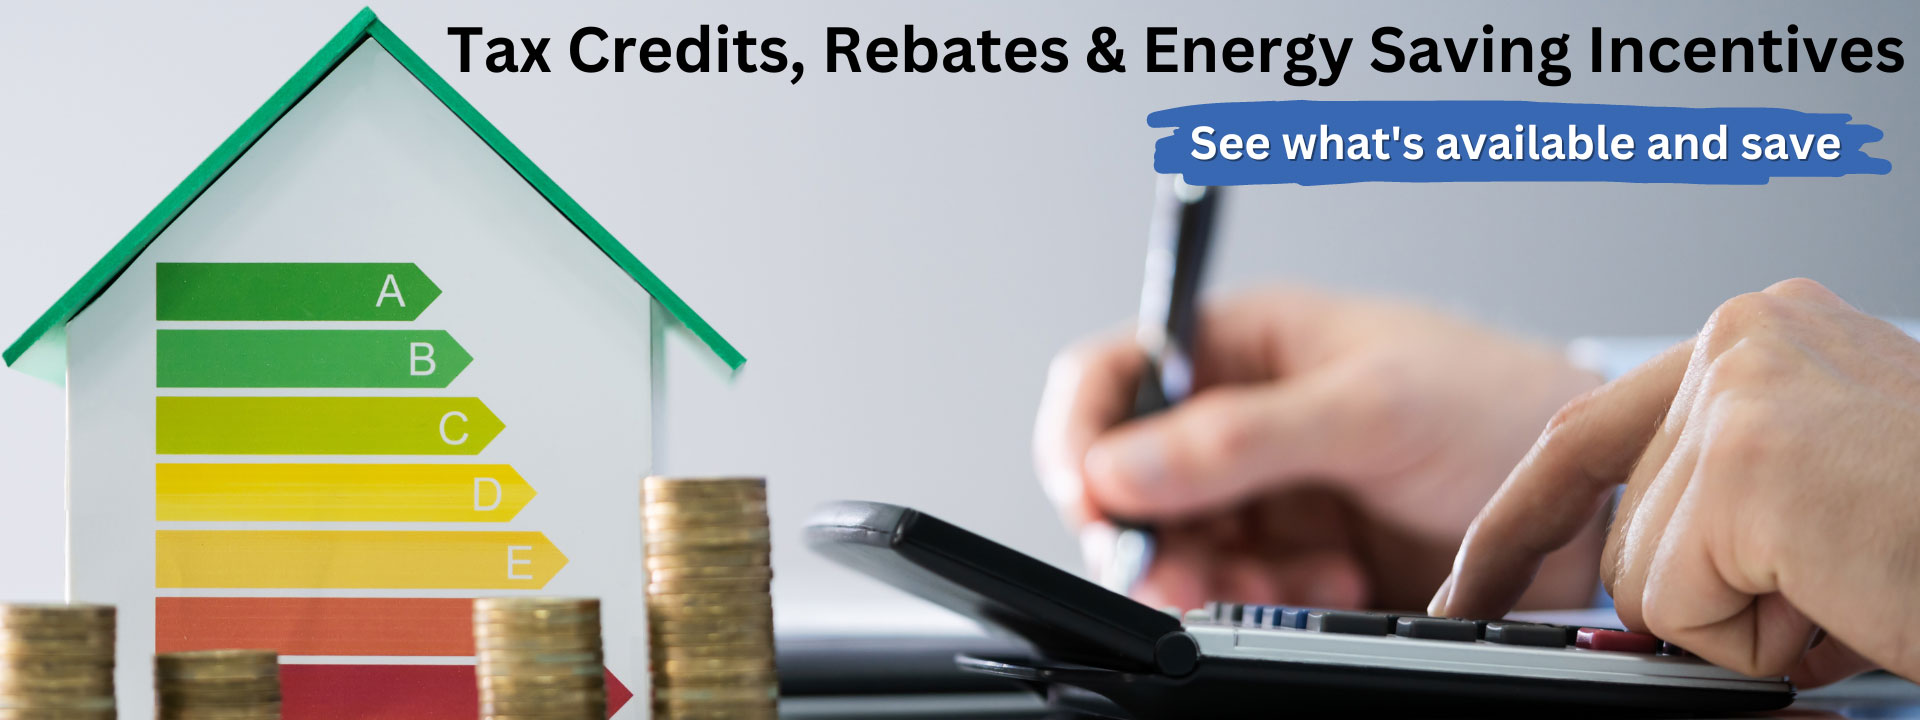 Tax Energy Credits Rebates and Incentives